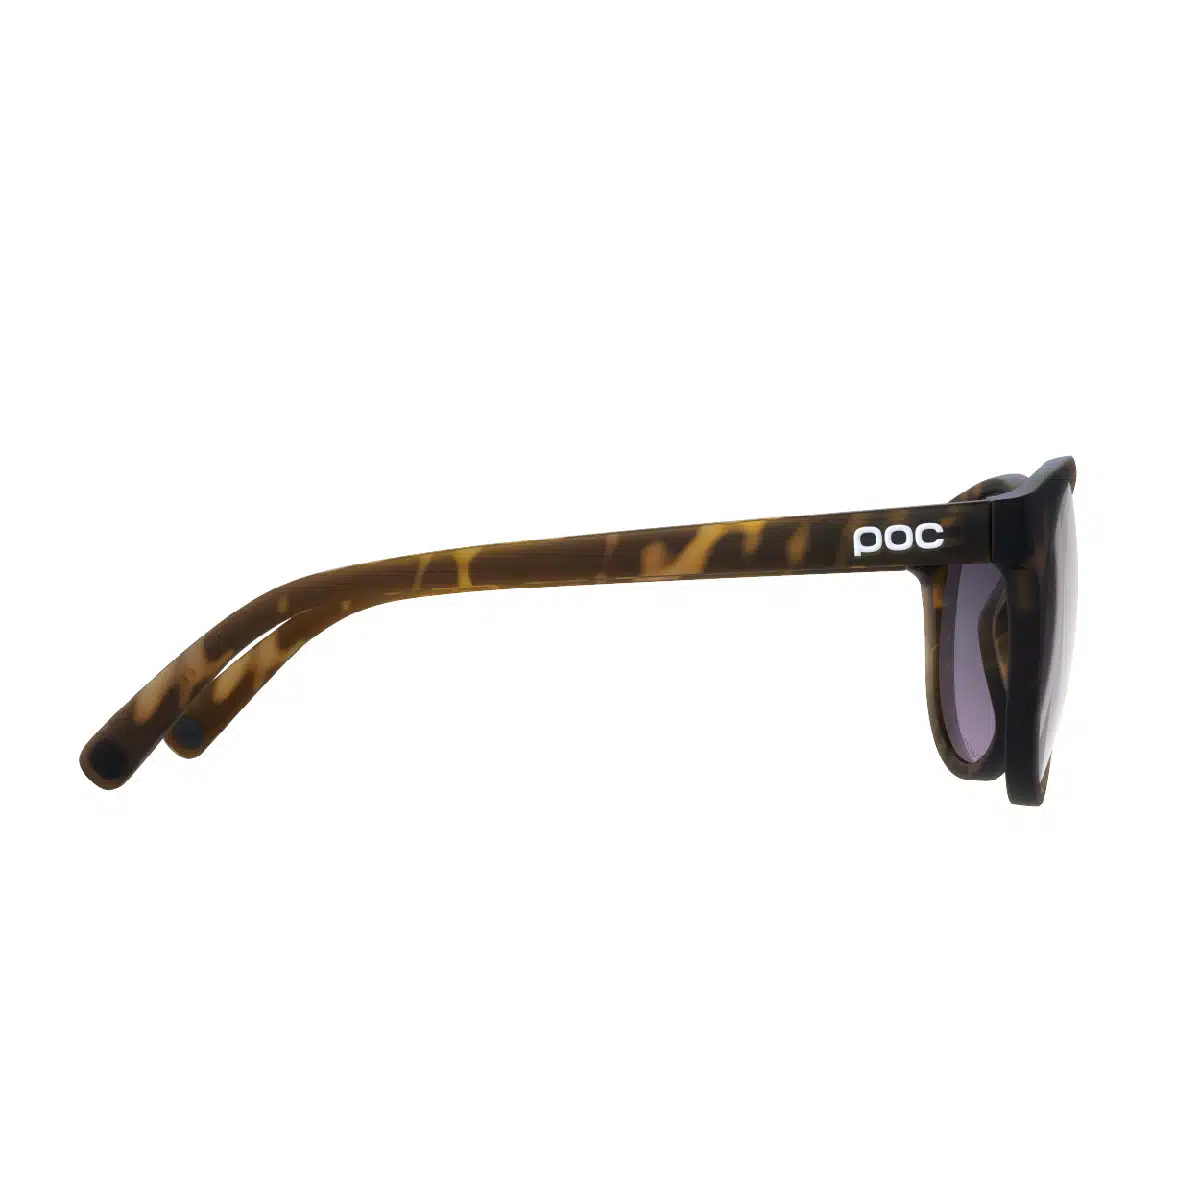 POC Know Sunglasses side profile